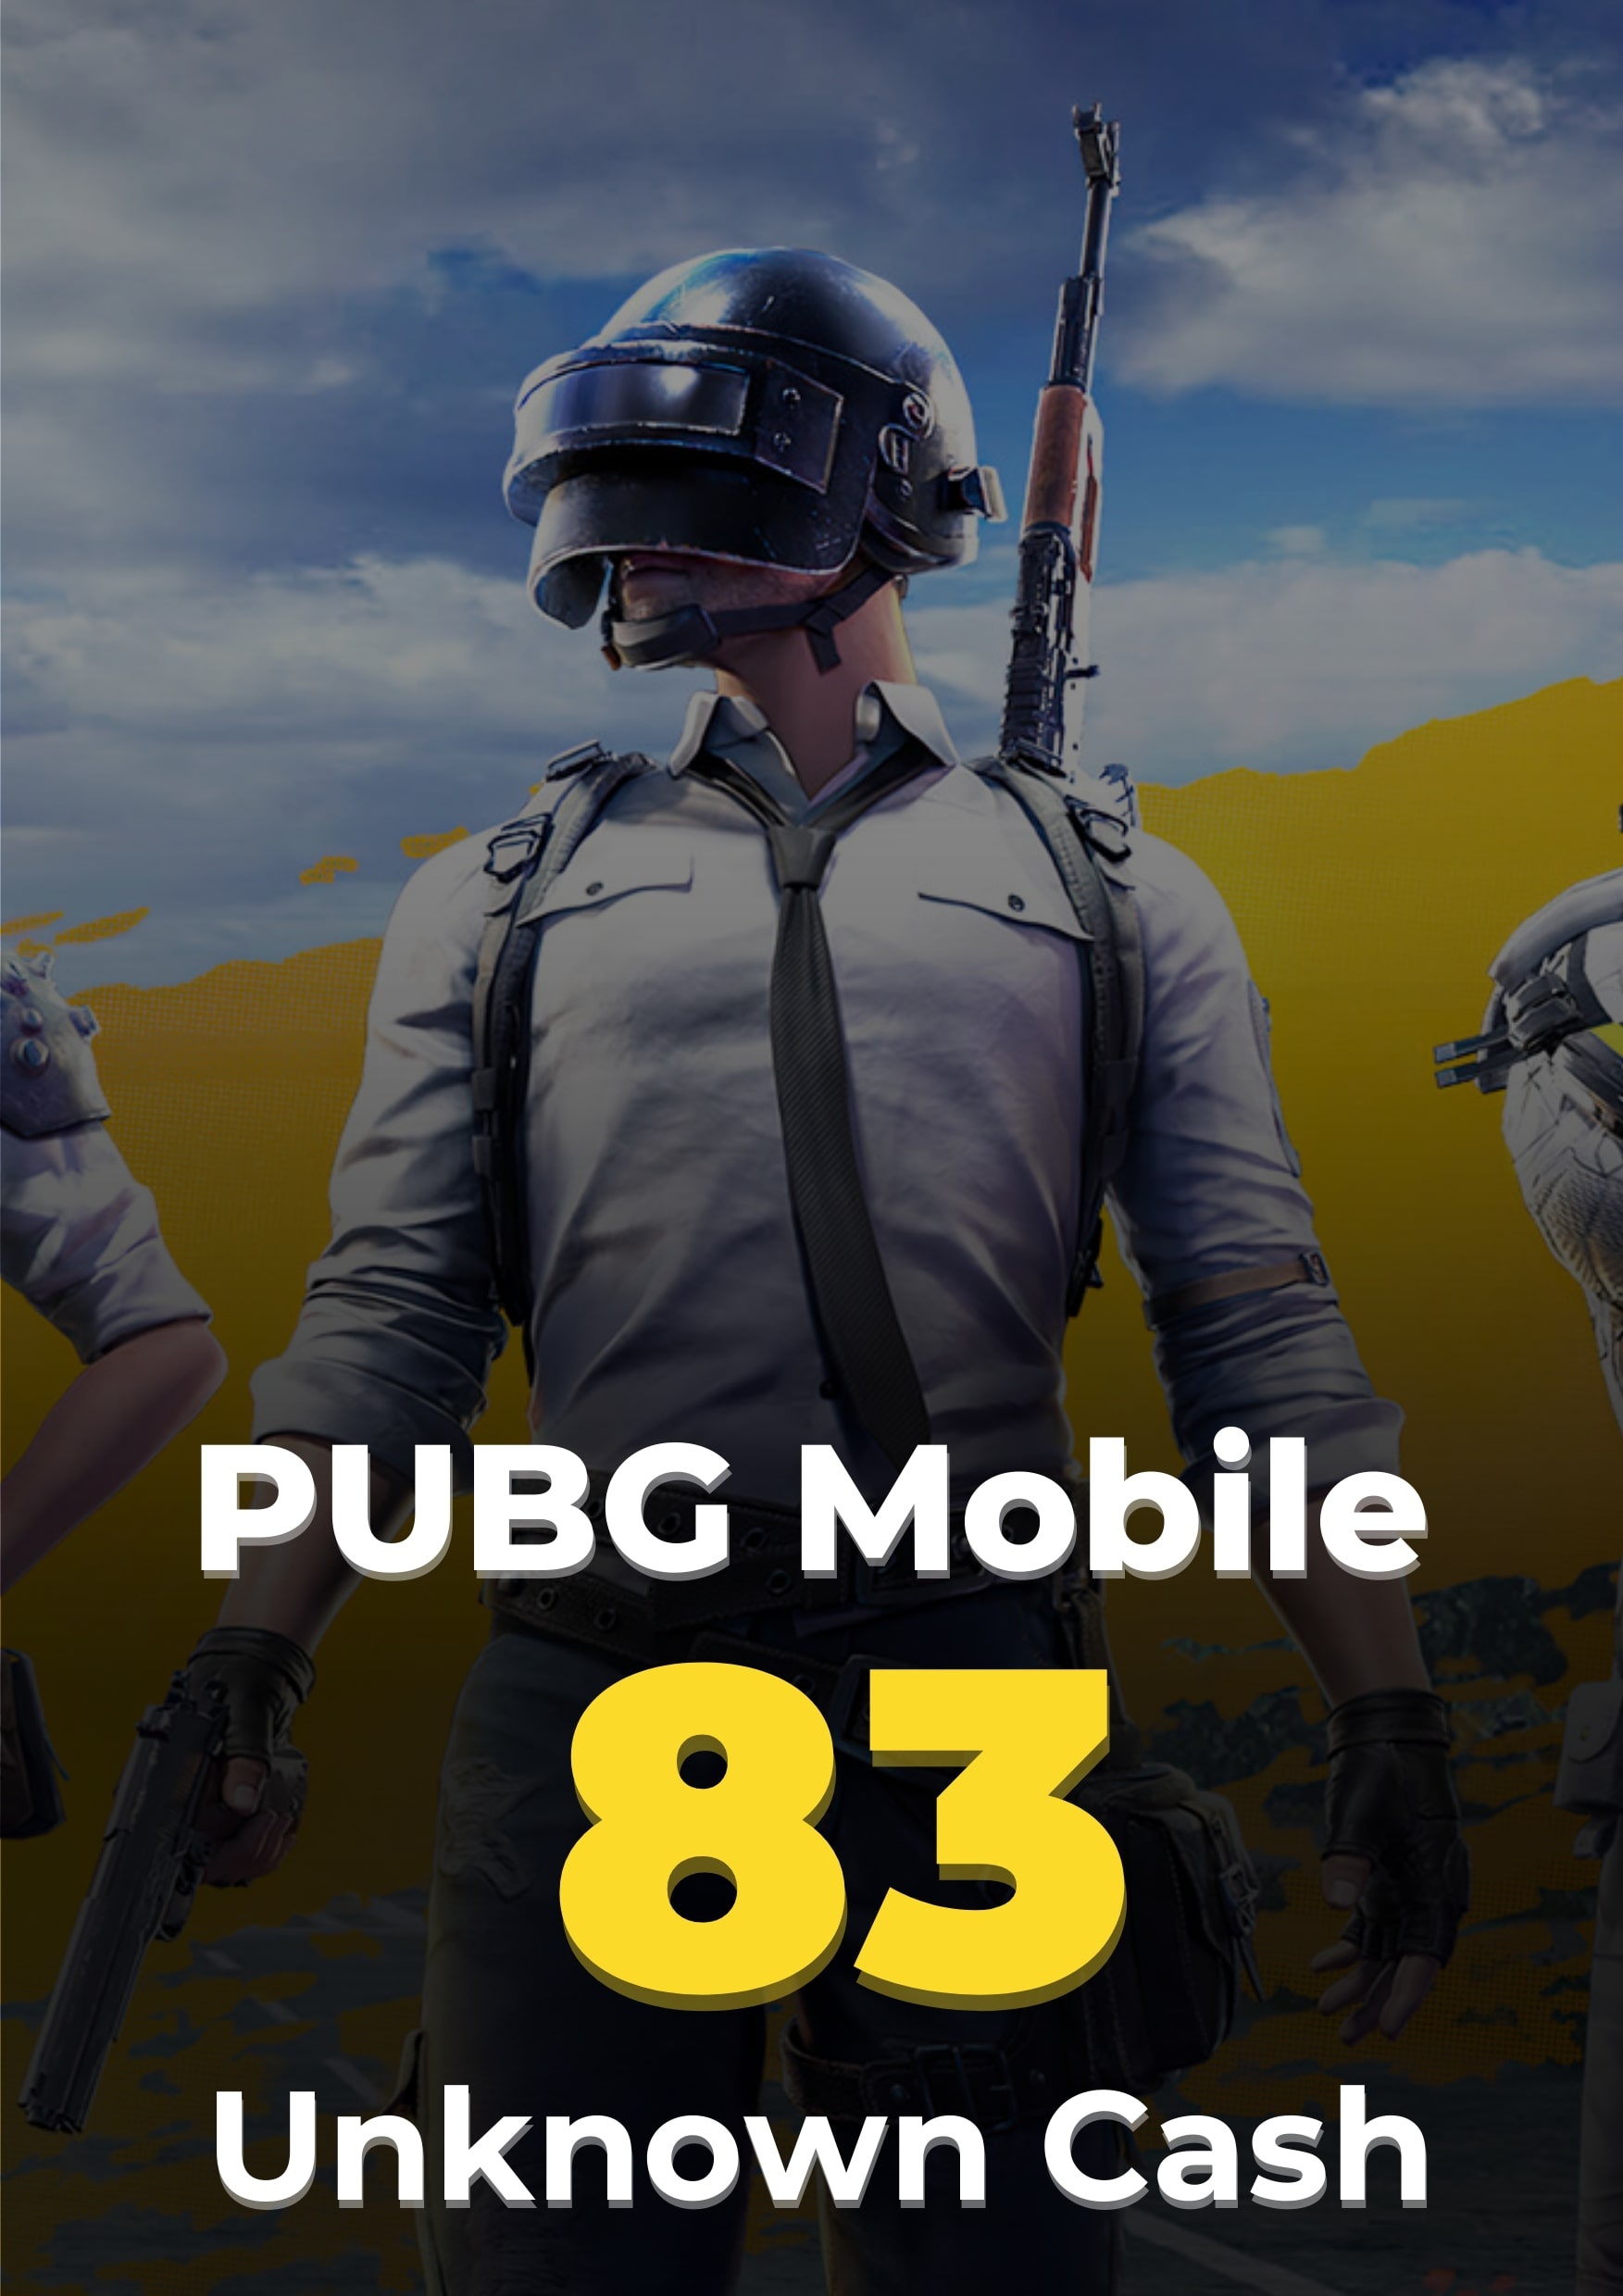 PUBG Mobile 83 UC